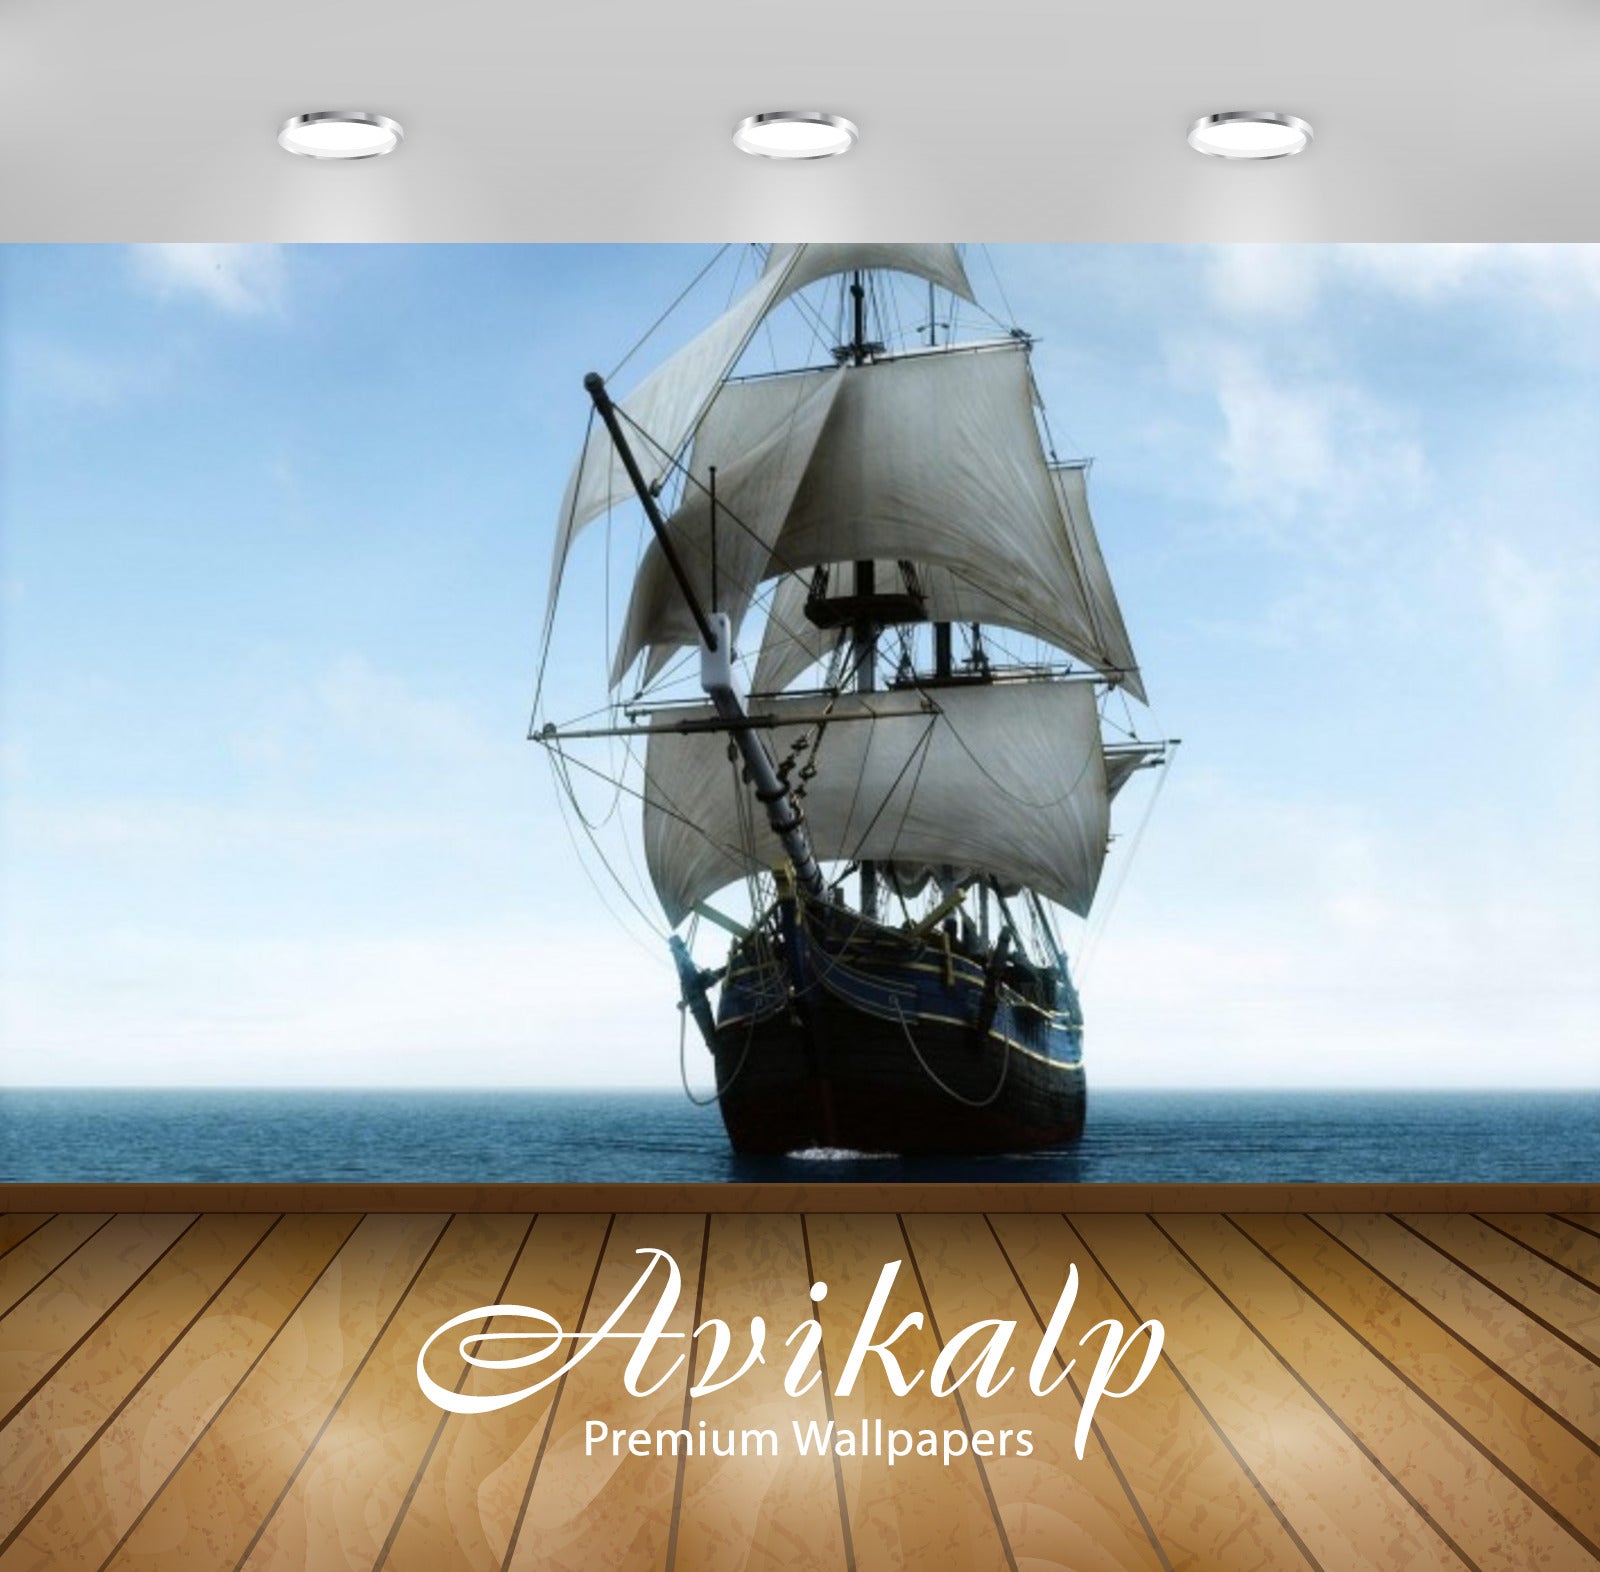 Avikalp Exclusive Awi2440 Big Sailing Ship Full HD Wallpapers for Living room, Hall, Kids Room, Kitc